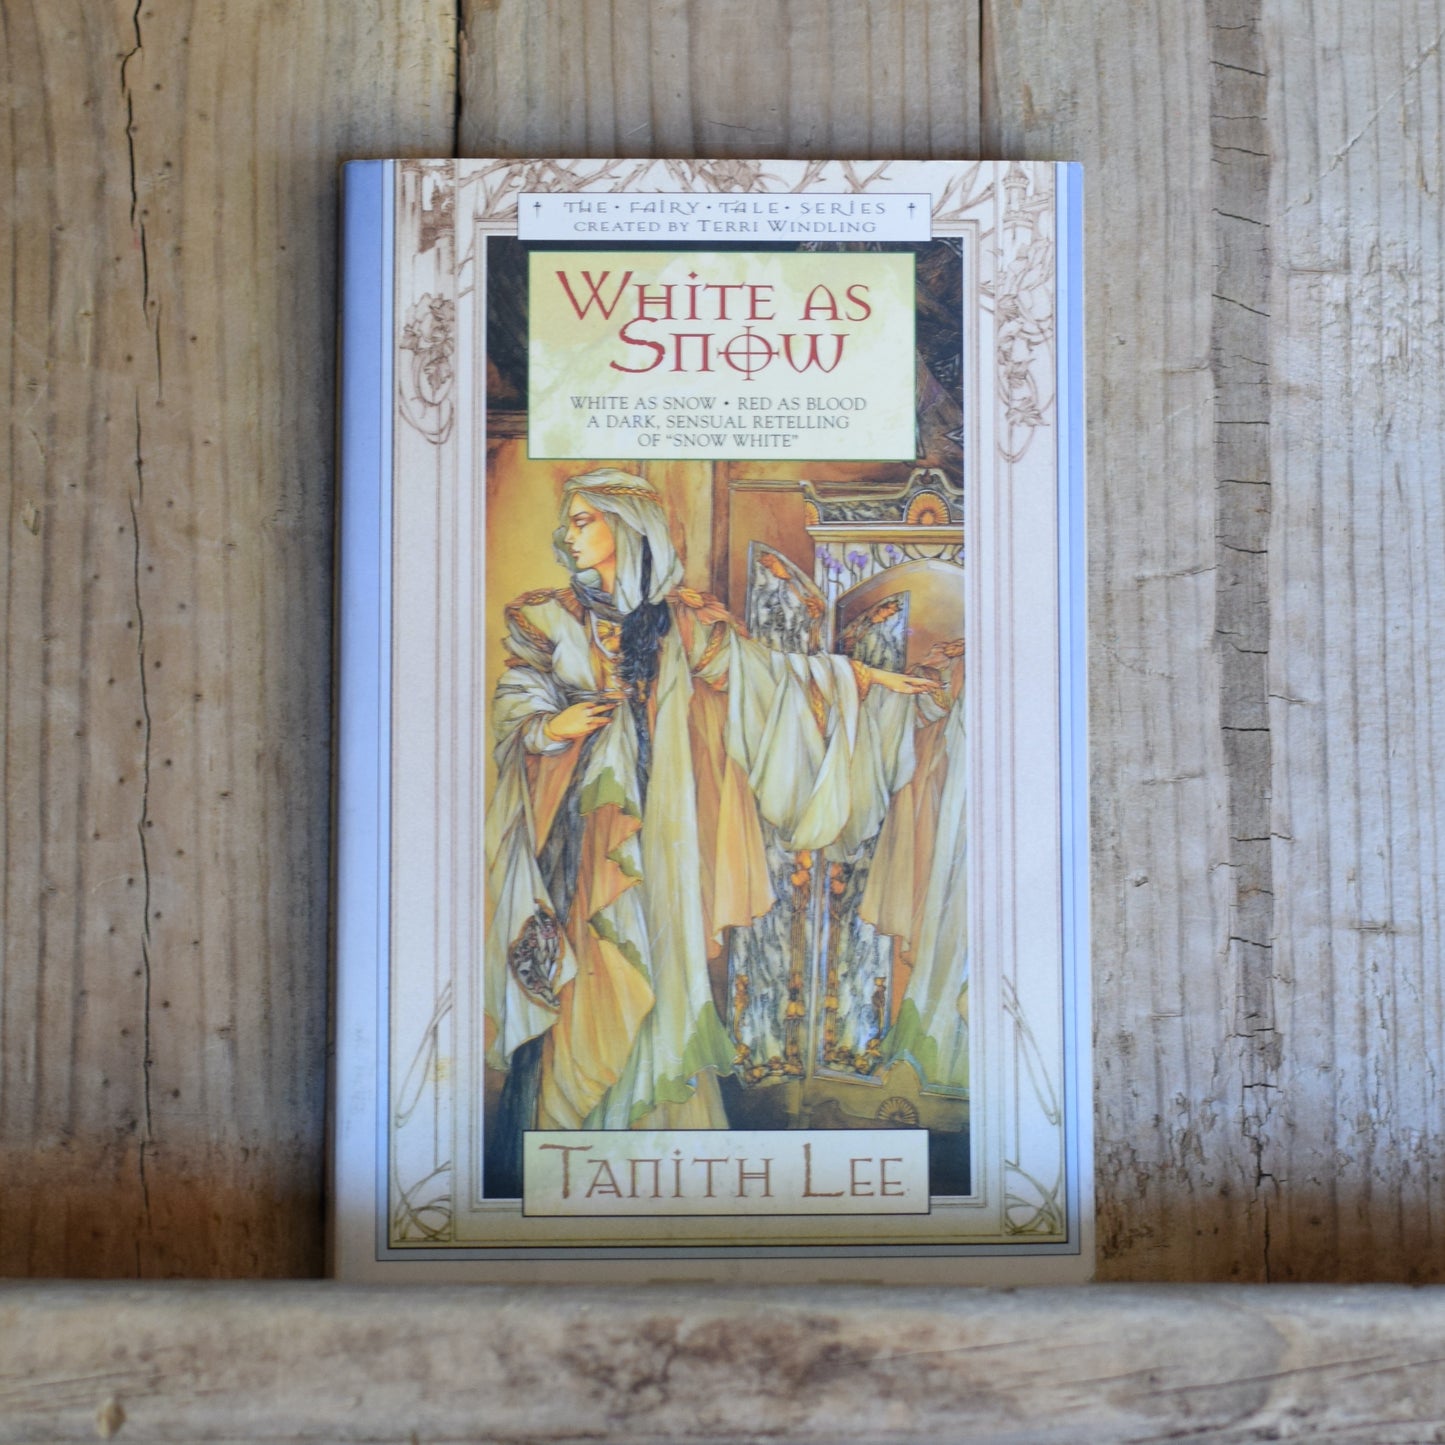 Fantasy Paperback: Tanith Lee - White as Snow